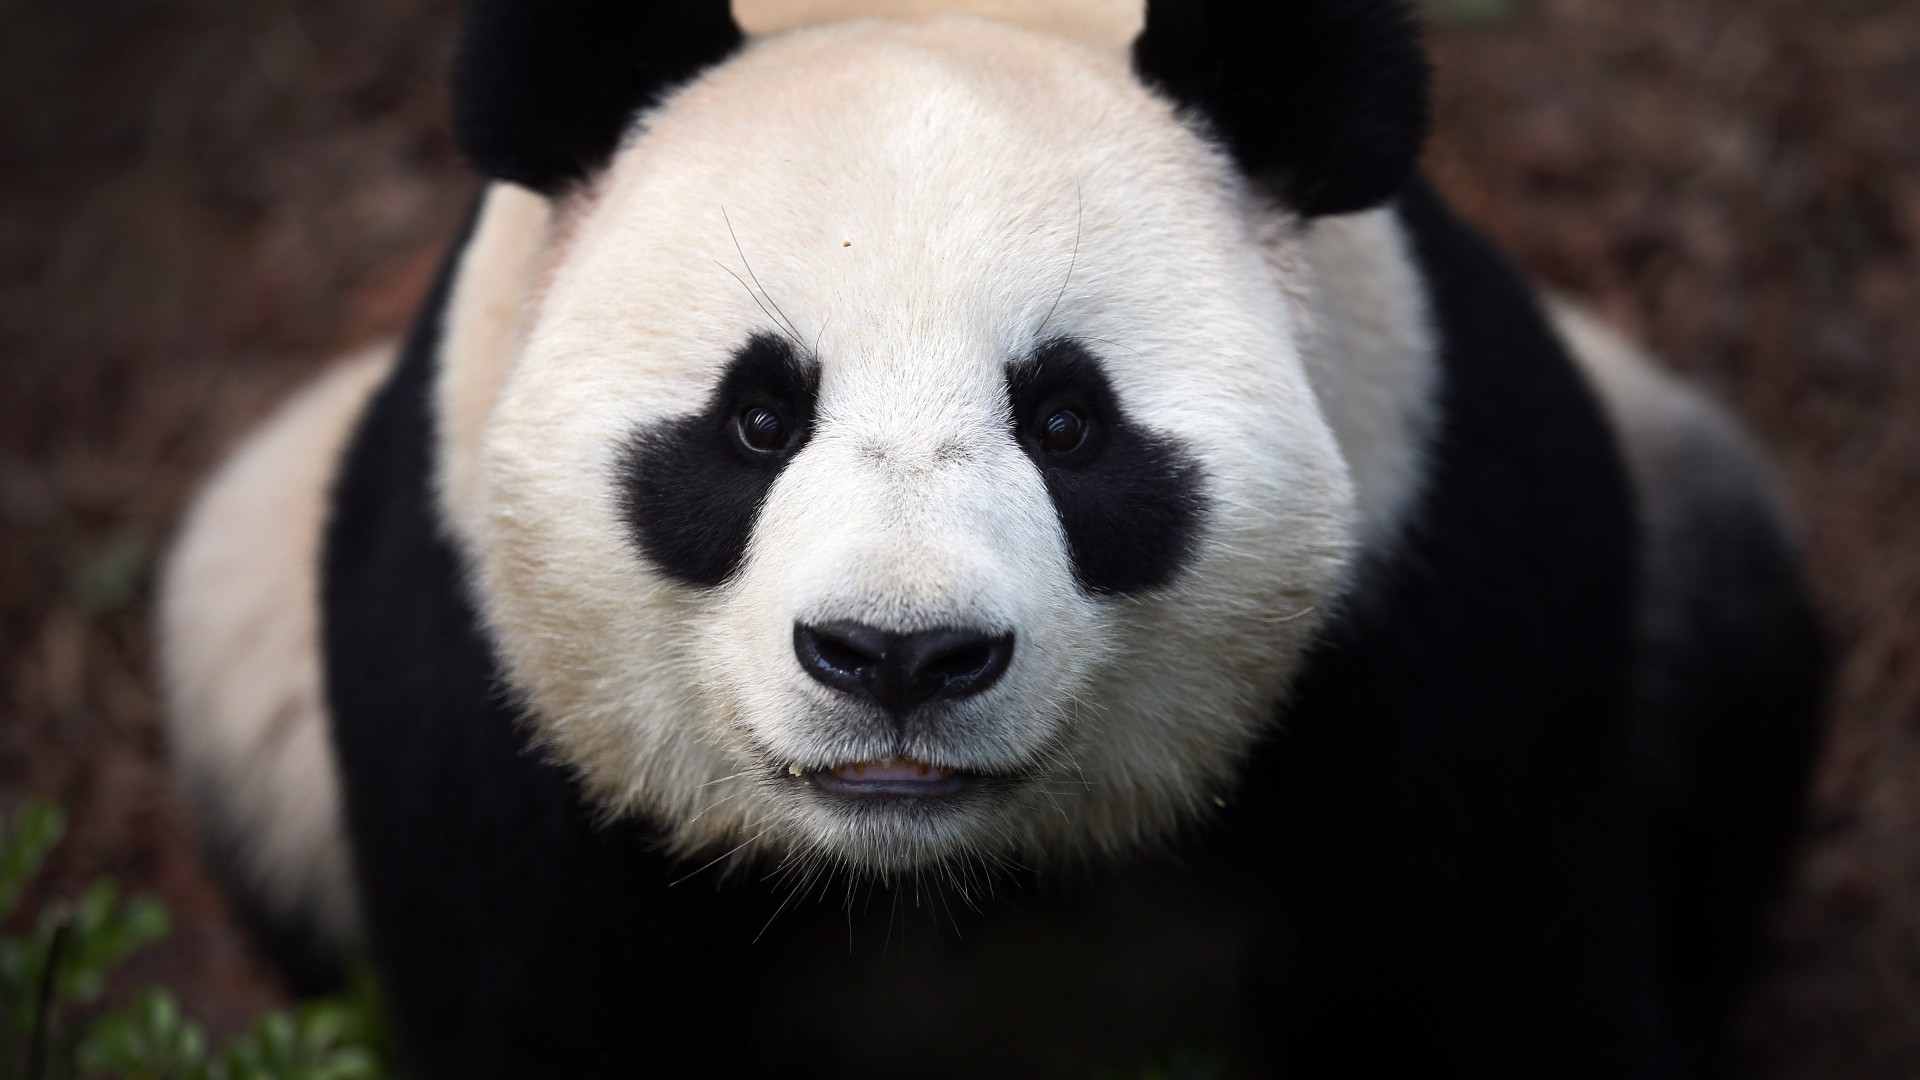 Сhina panda, bears, China, animal, zoo, black, white, eyes, wild, nature (horizontal)